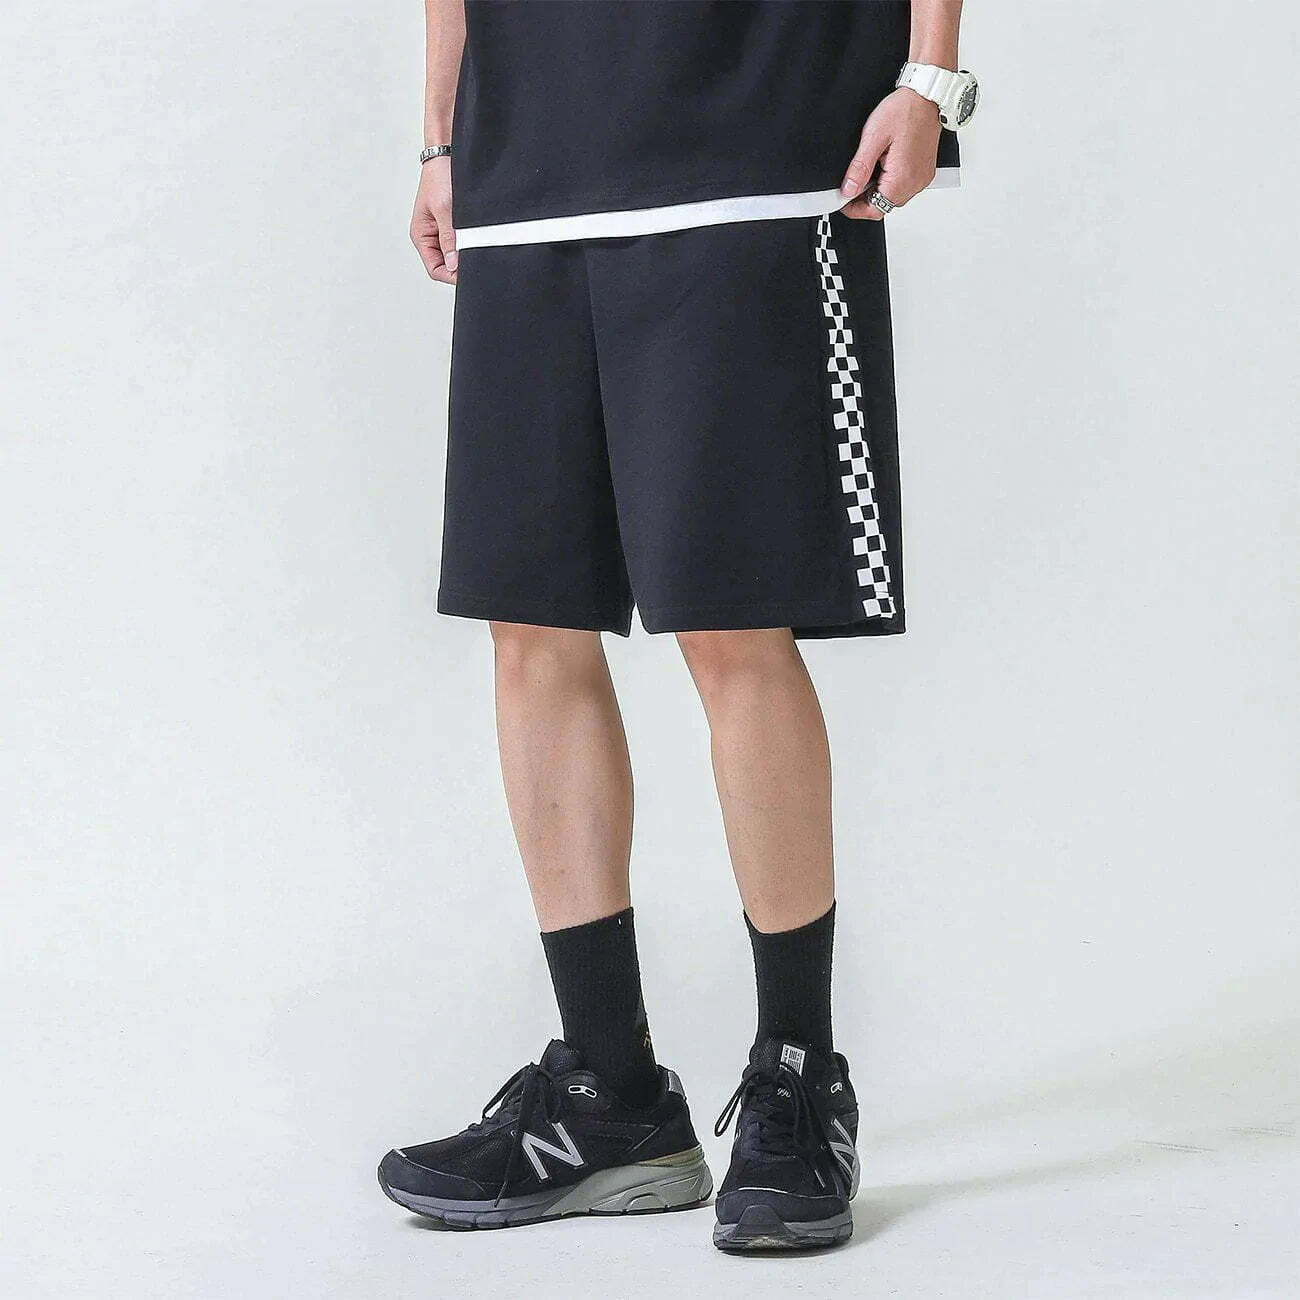 checkerboard print shorts edgy streetwear staple 5826